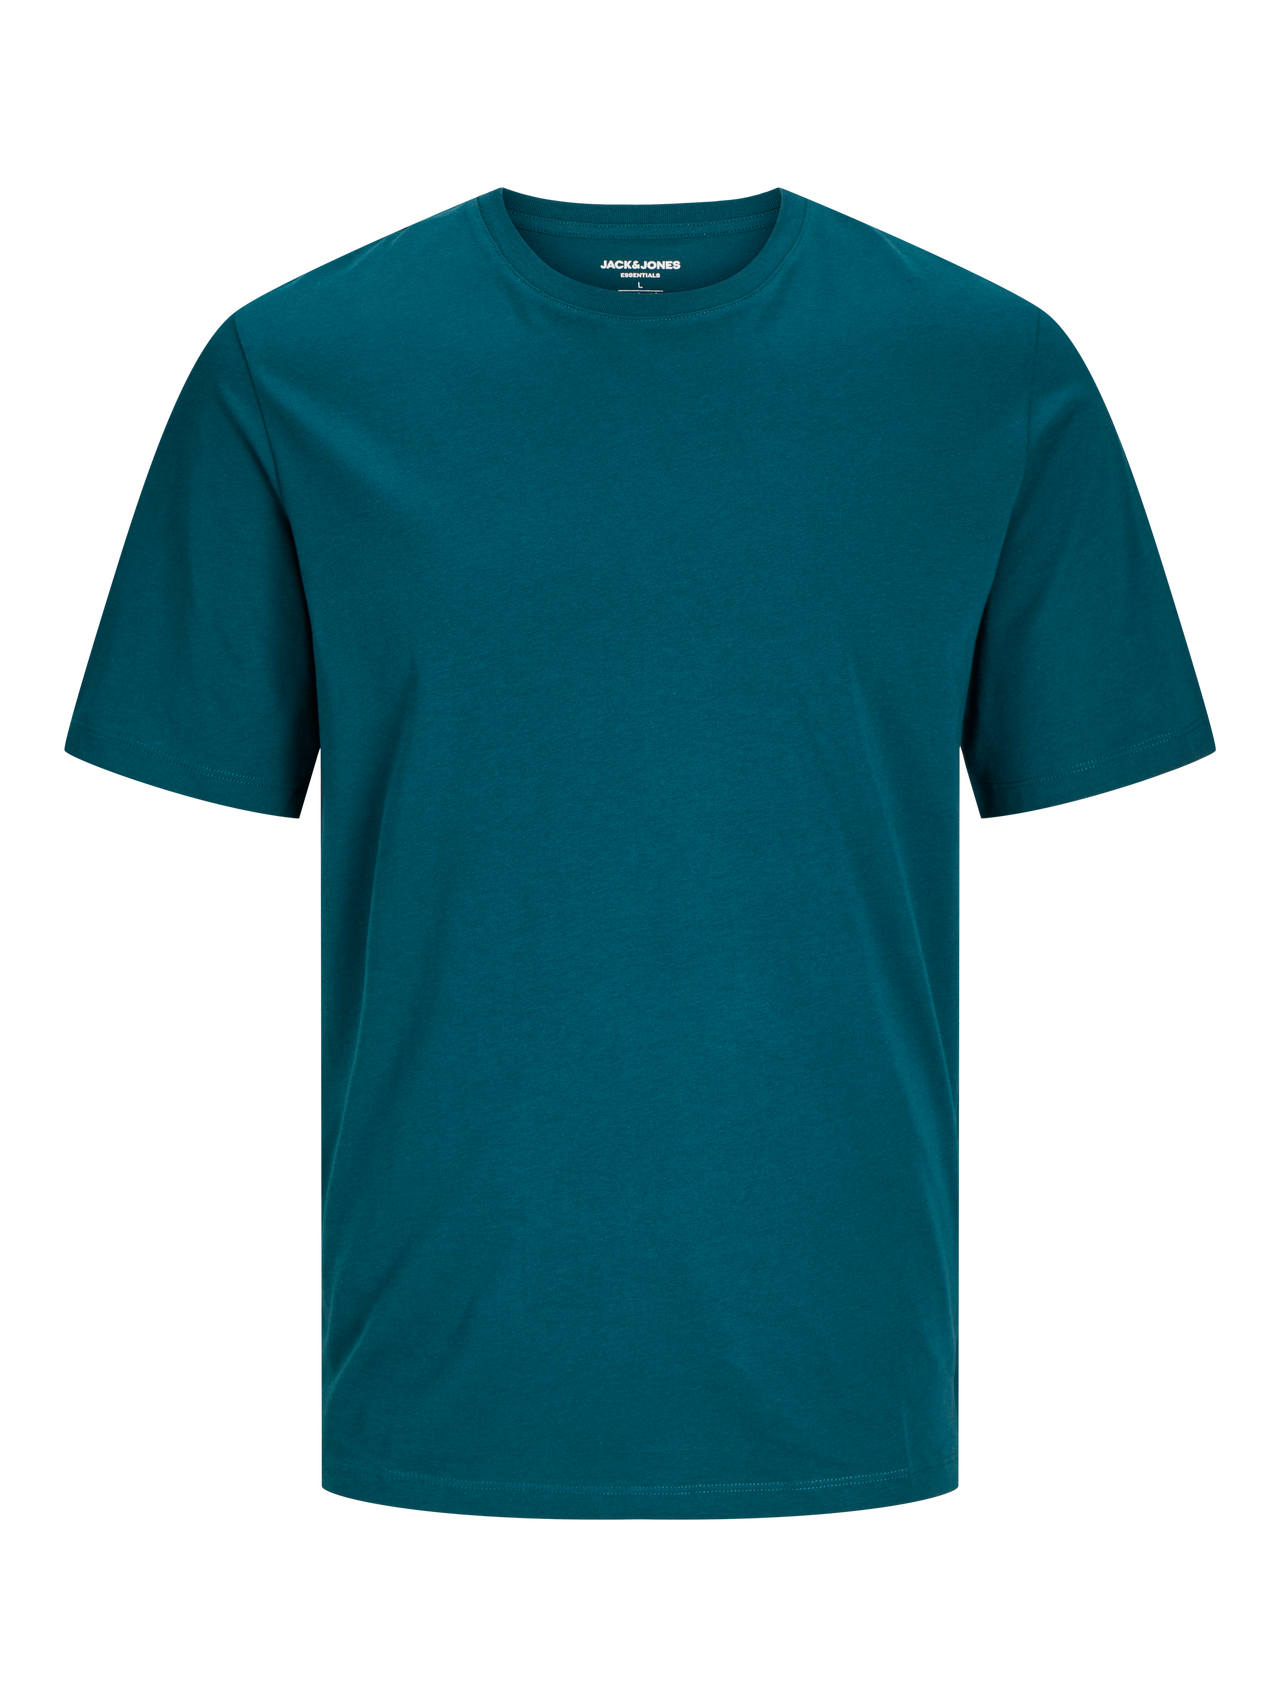 Jack & Jones Einfarbig Rundhals T-shirt -Deep Teal - 12156101